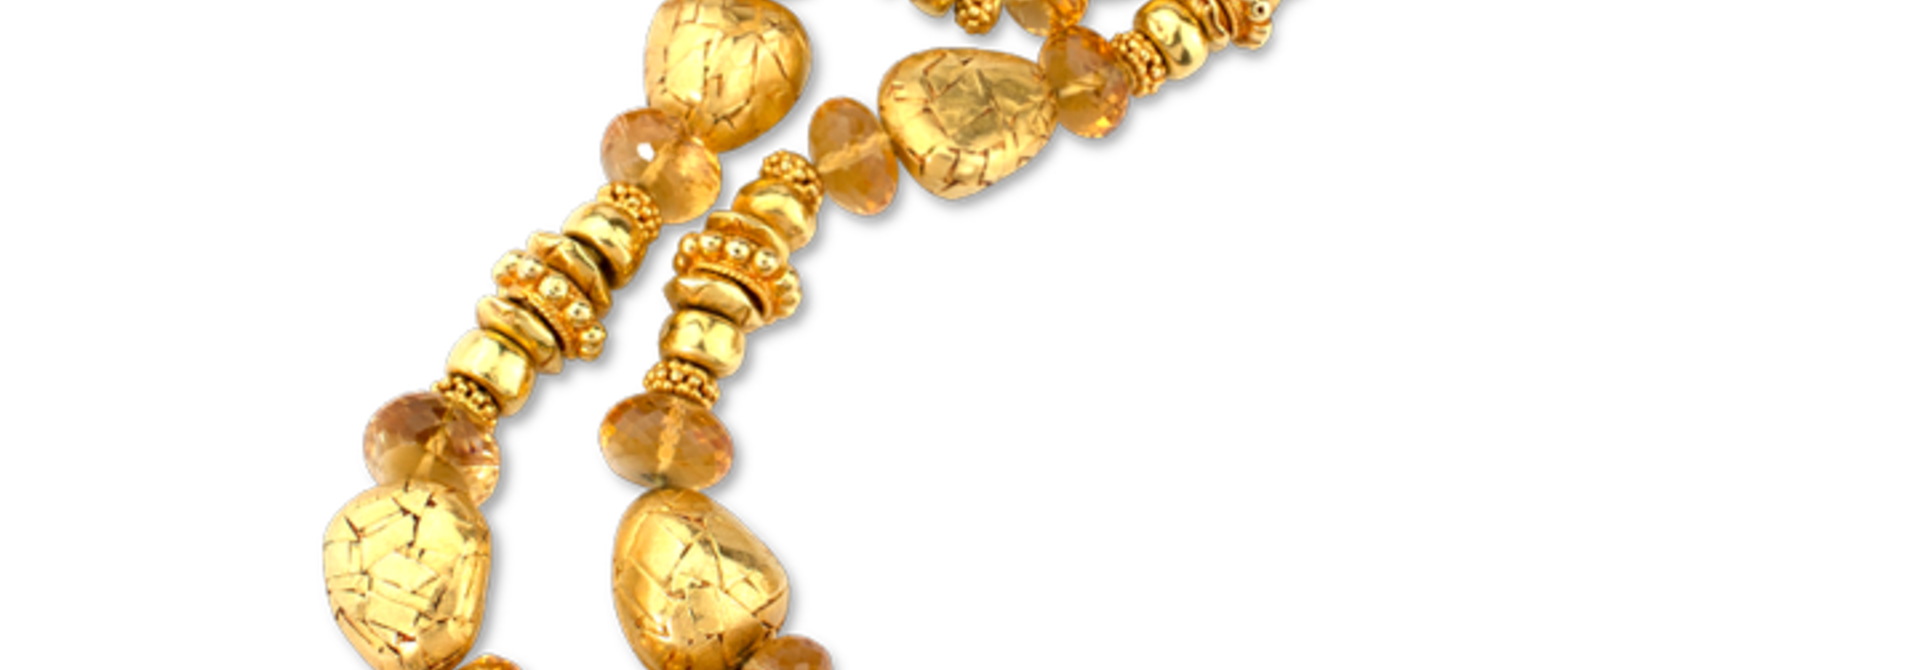 Handmade Gold Beads & Citrine Necklace - 30"